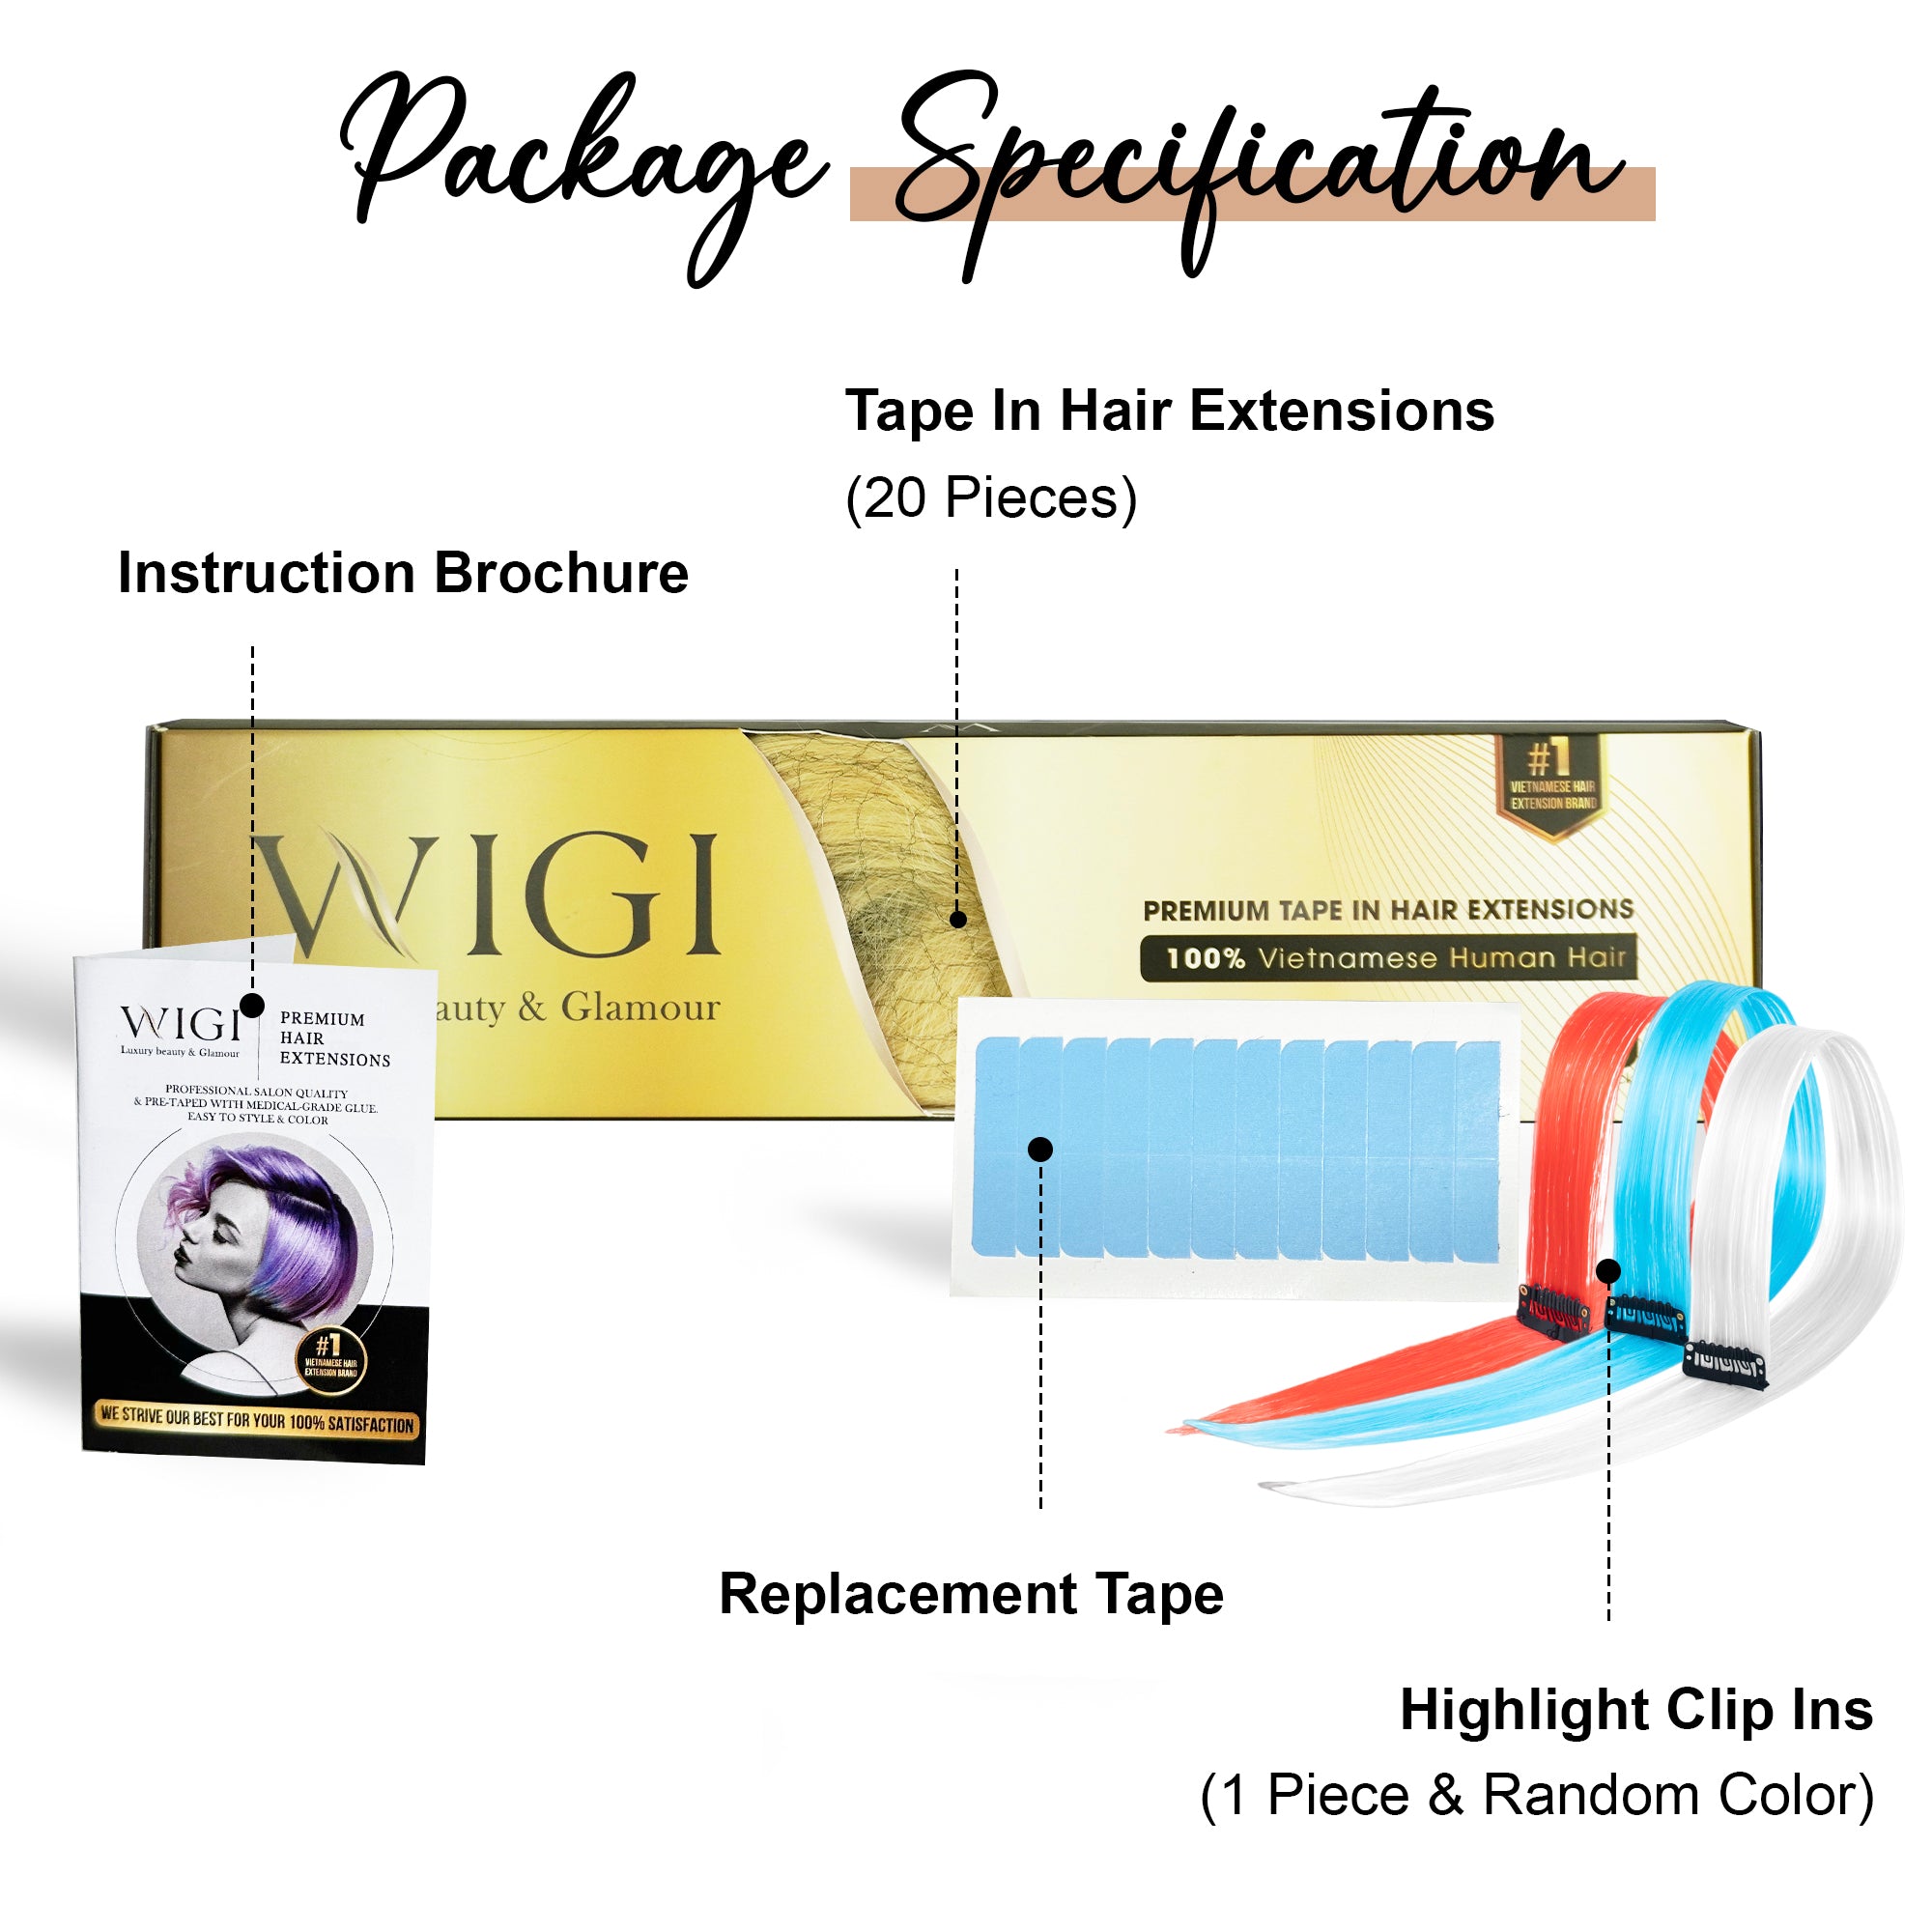 Platinum Blonde (60A) Tape in Hair Extensions - 100% Premium Human Hair